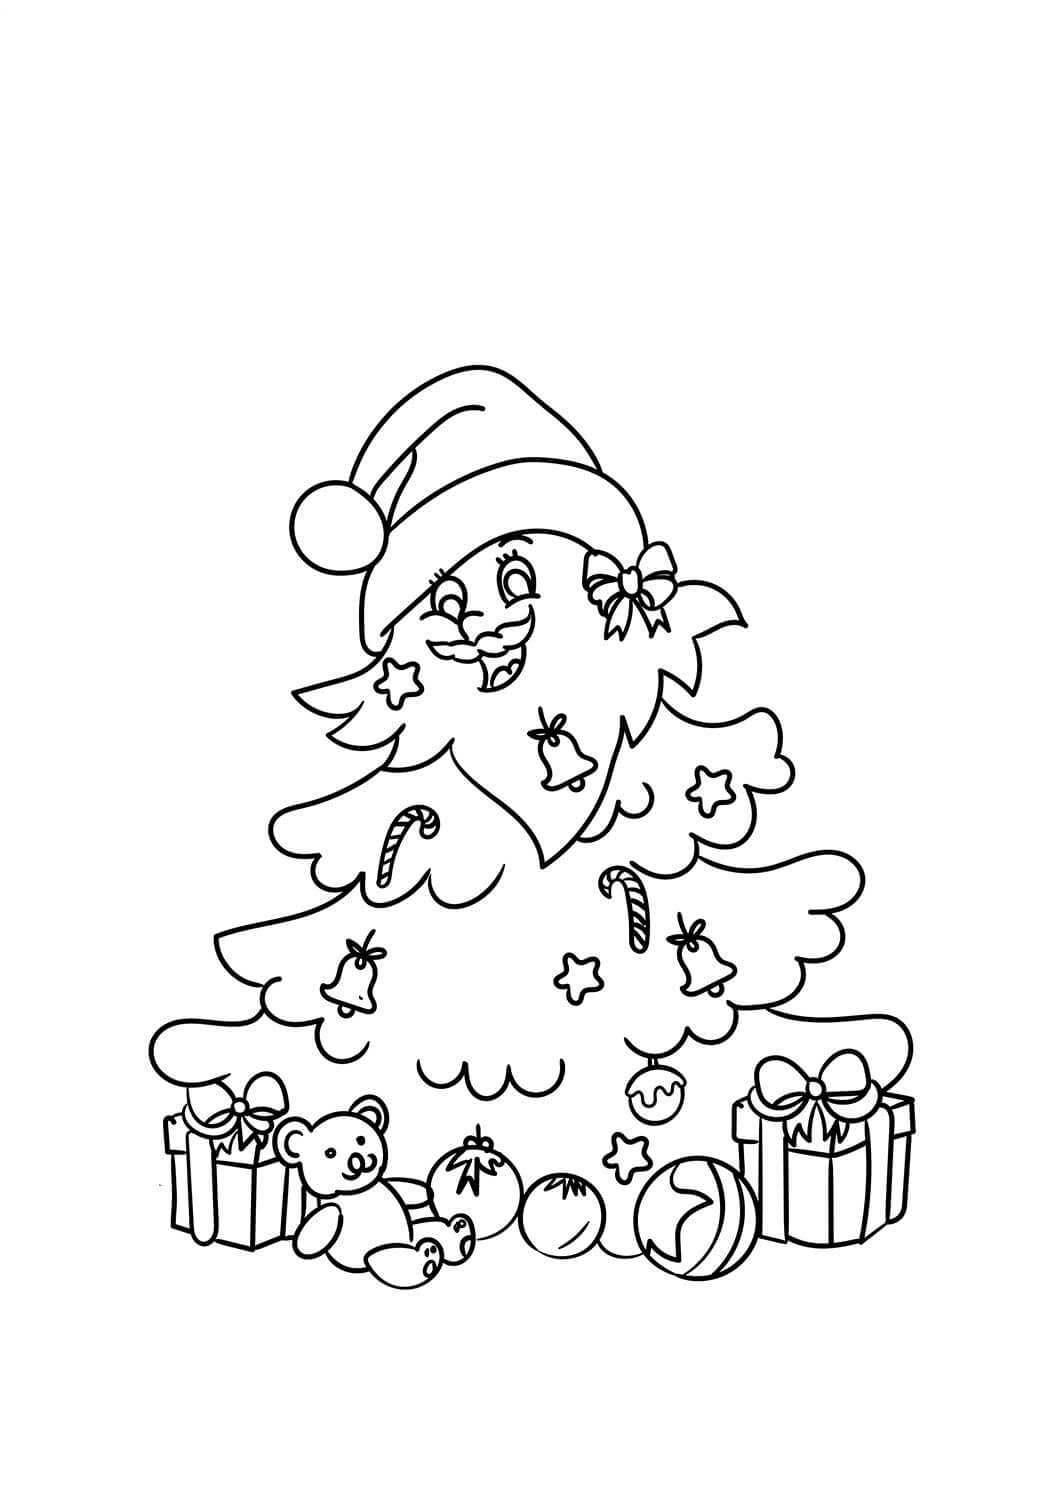 Sapin de Noël de Dessin Animé coloring page